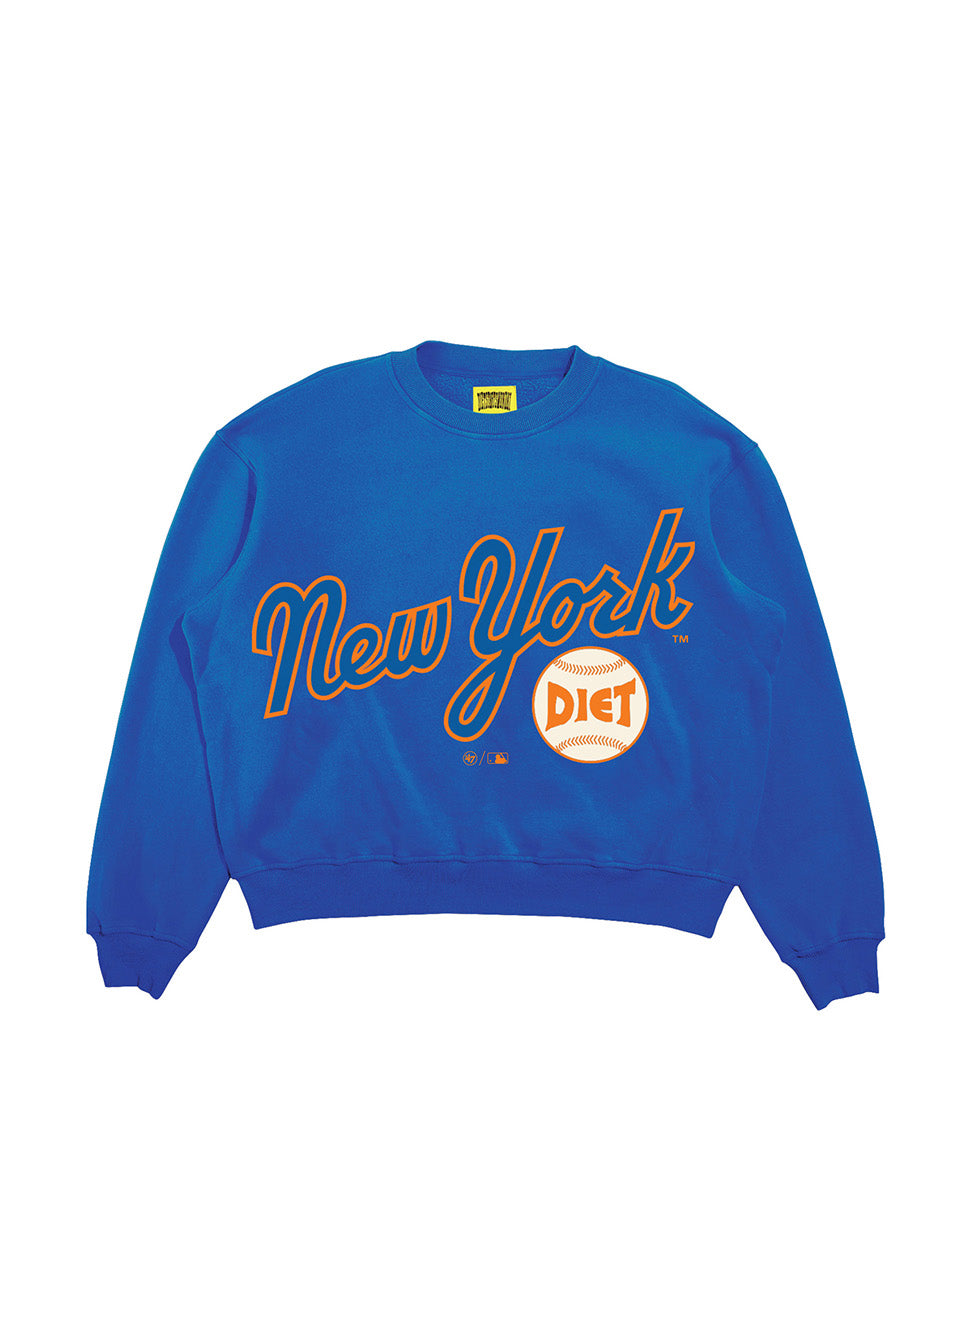 Mets City Sweatshirt - Blue